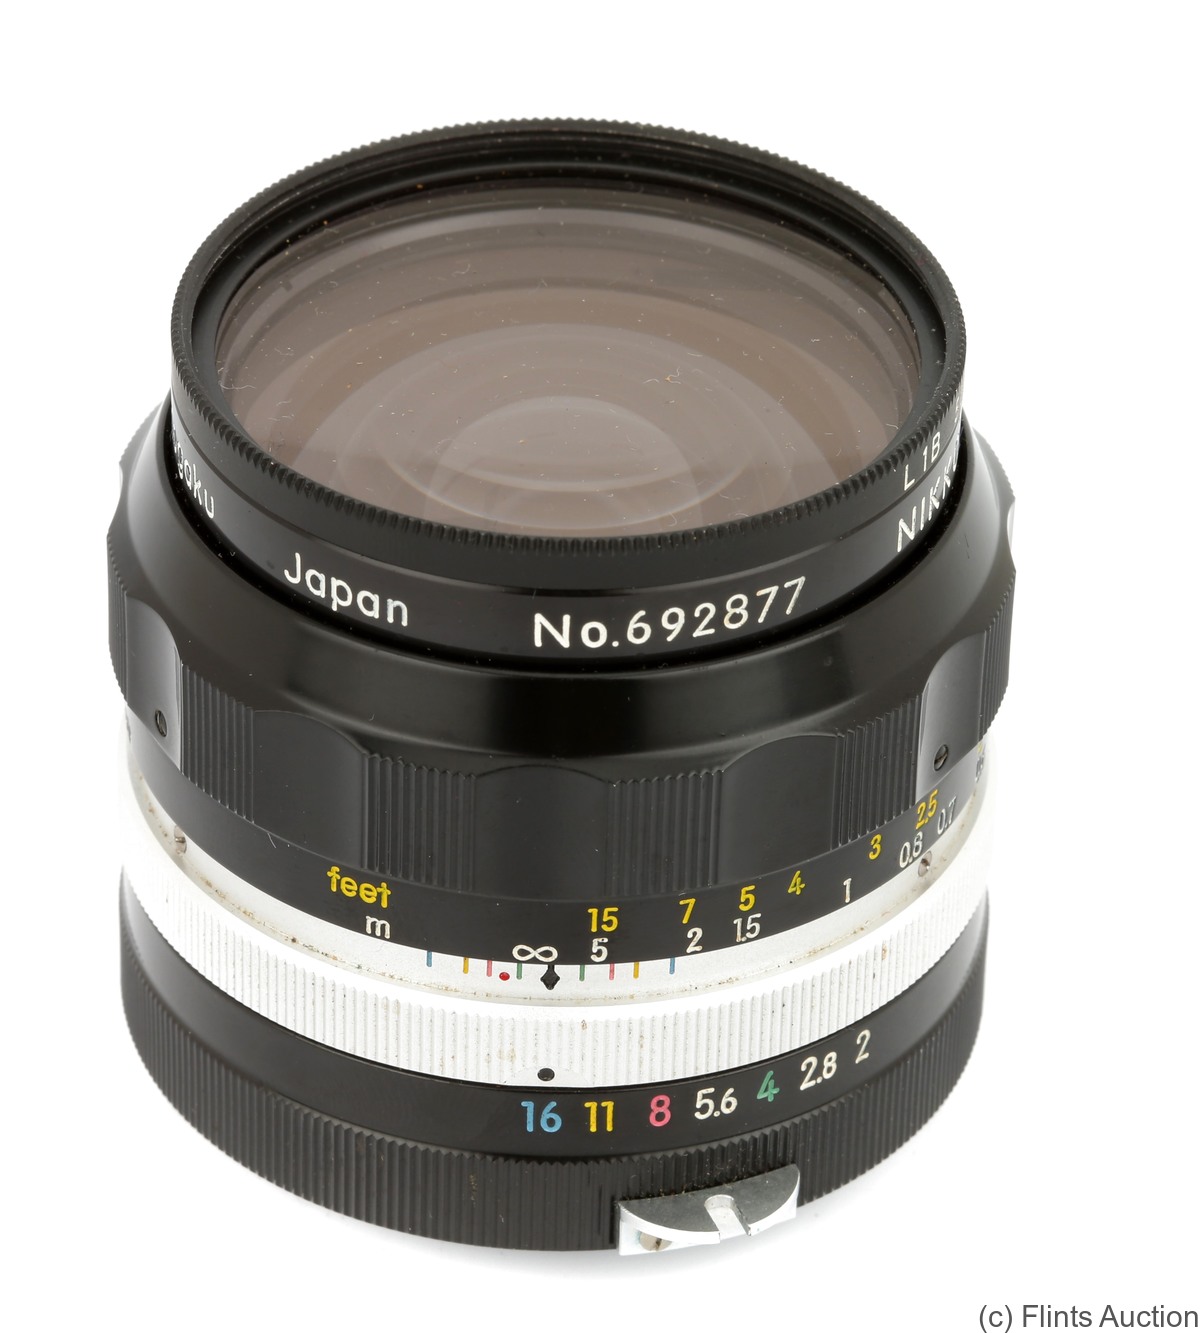 Nikon: 35mm (3.5cm) f2 Nikkor-O Auto camera